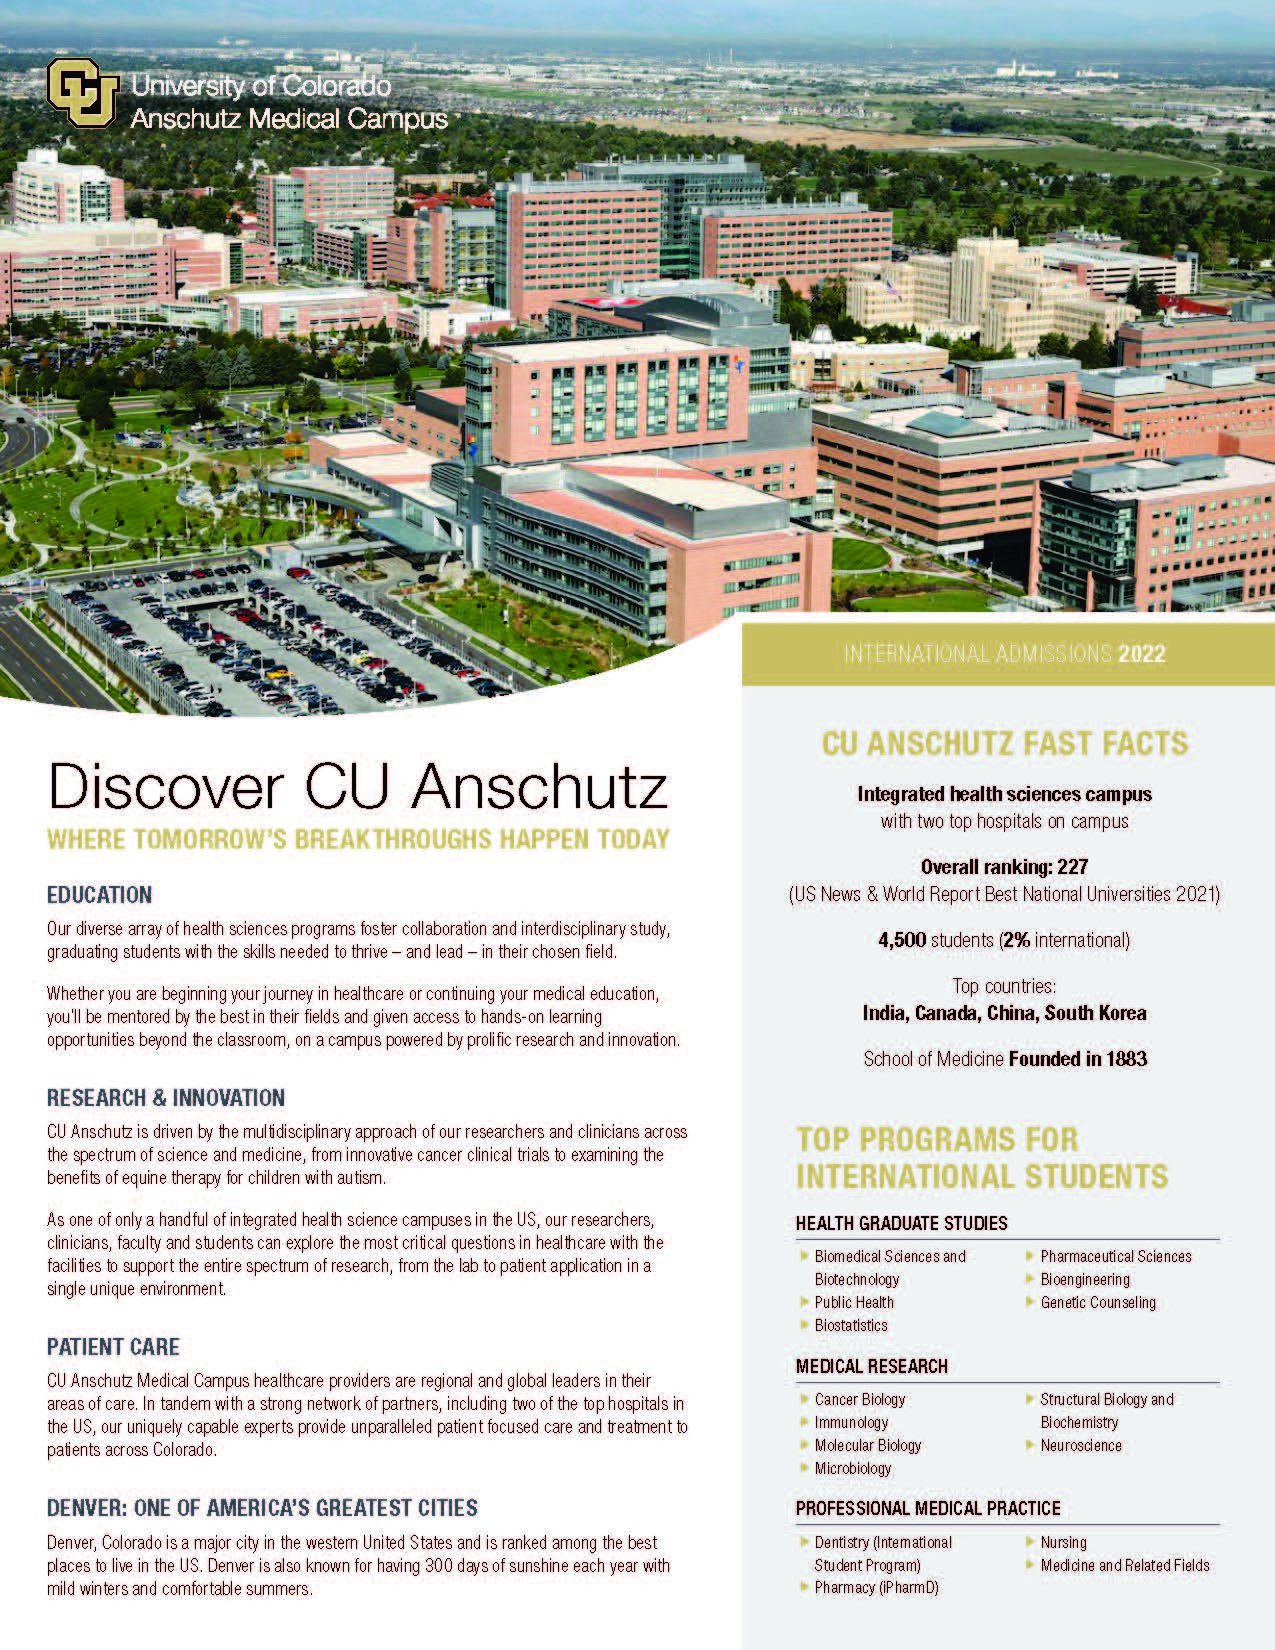 Discover CU Anschutz